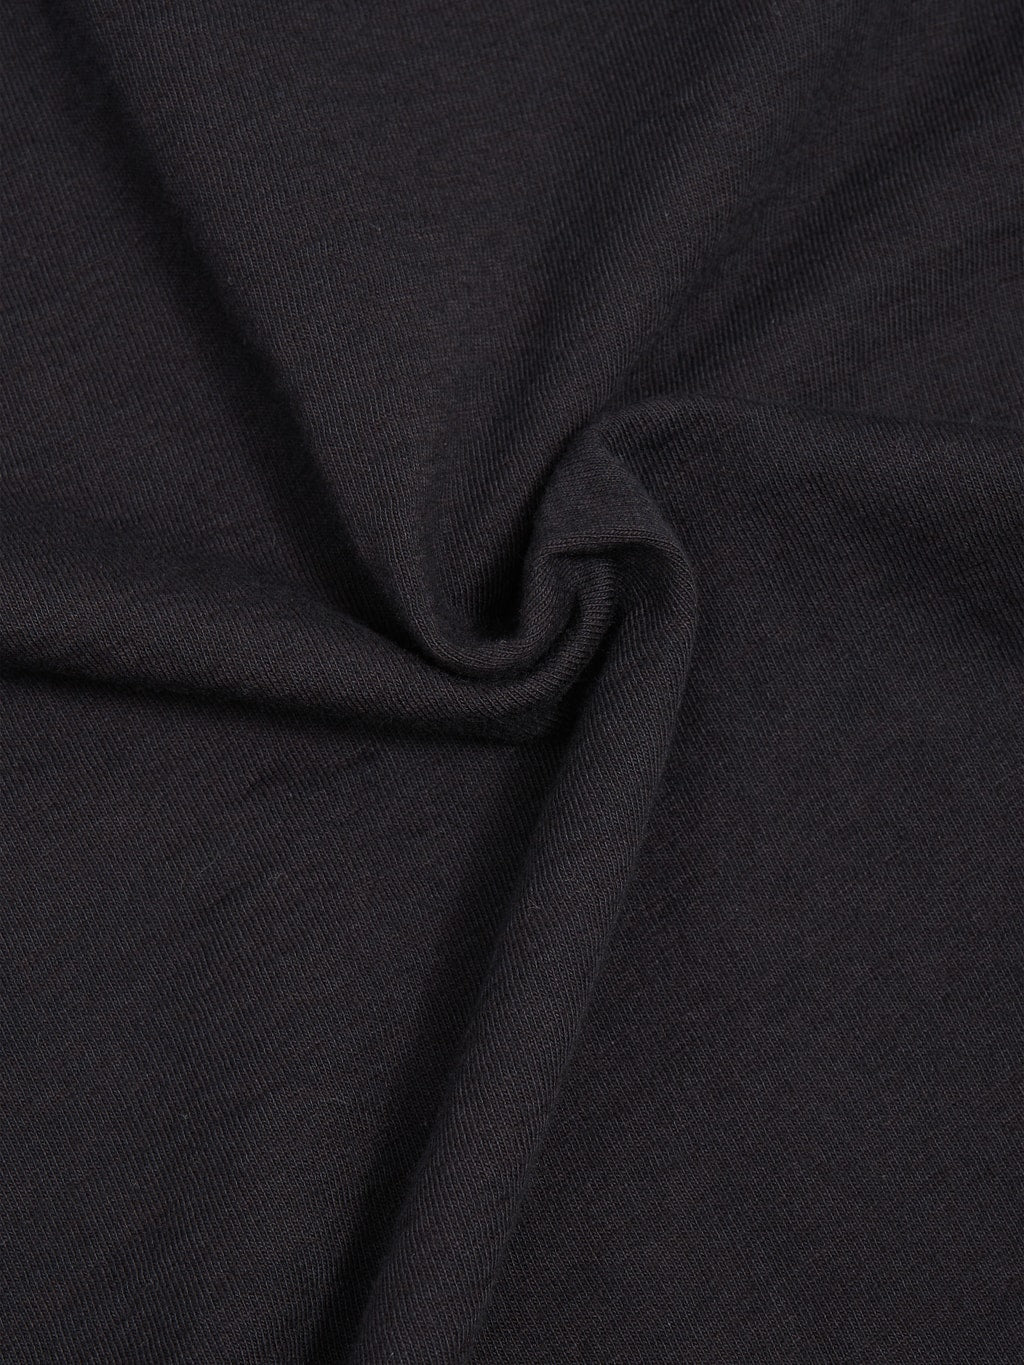 Pure Blue Japan SS5011 Black Indigo Dyed Crewneck TShirt  texture